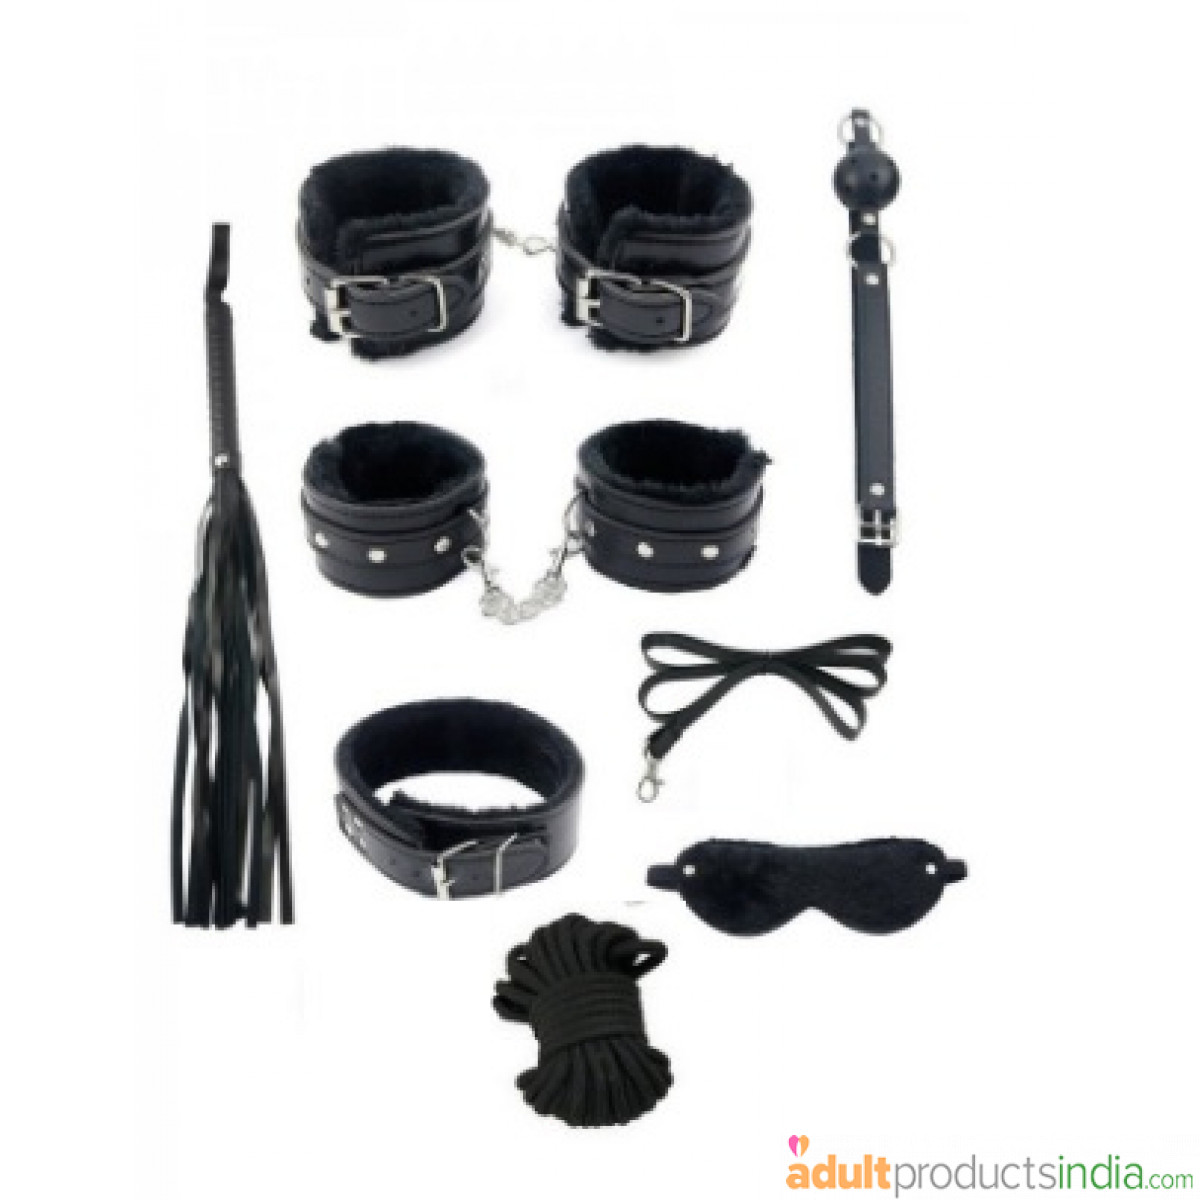 8-Pieces Bondage Kit Black